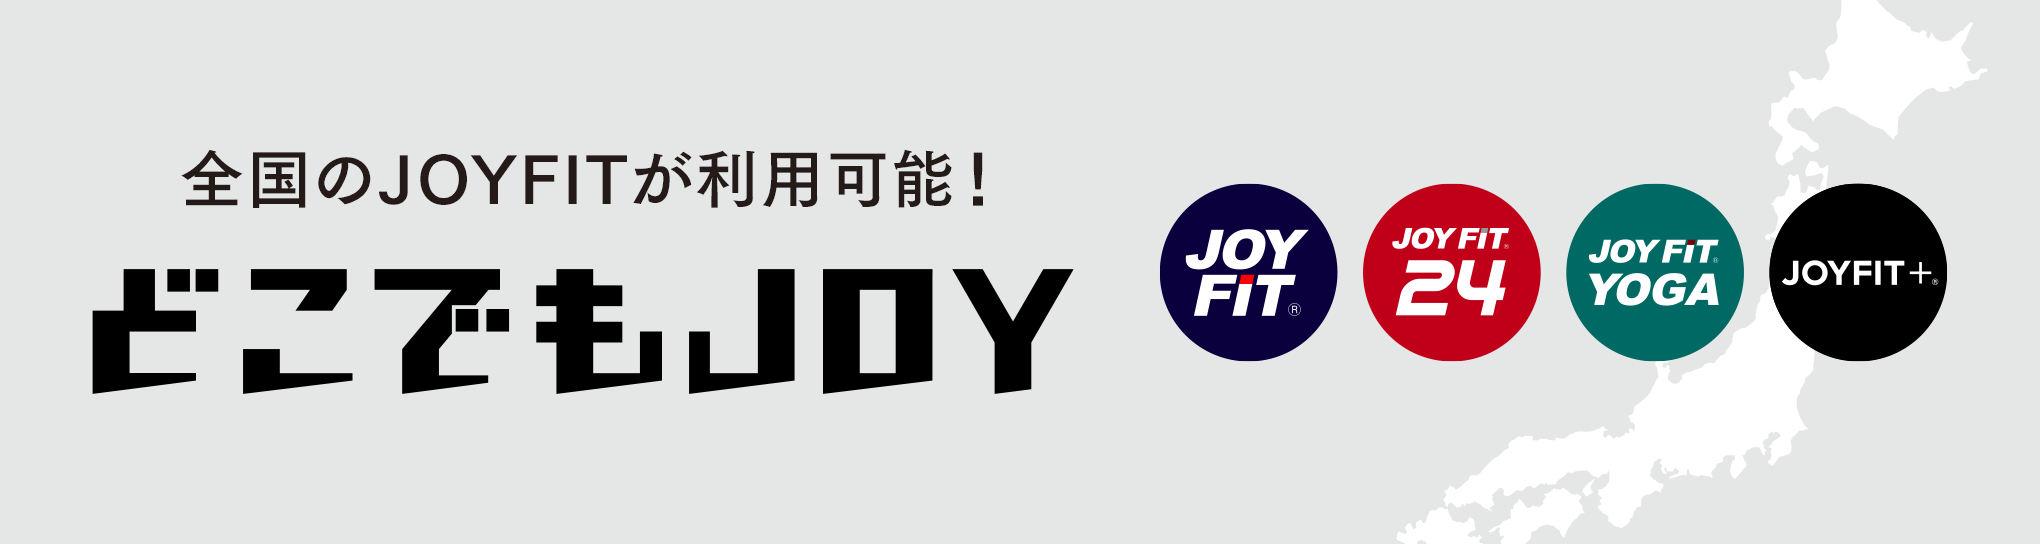 JOYFIT24(ジョイフィット24) 錦糸町店のPR